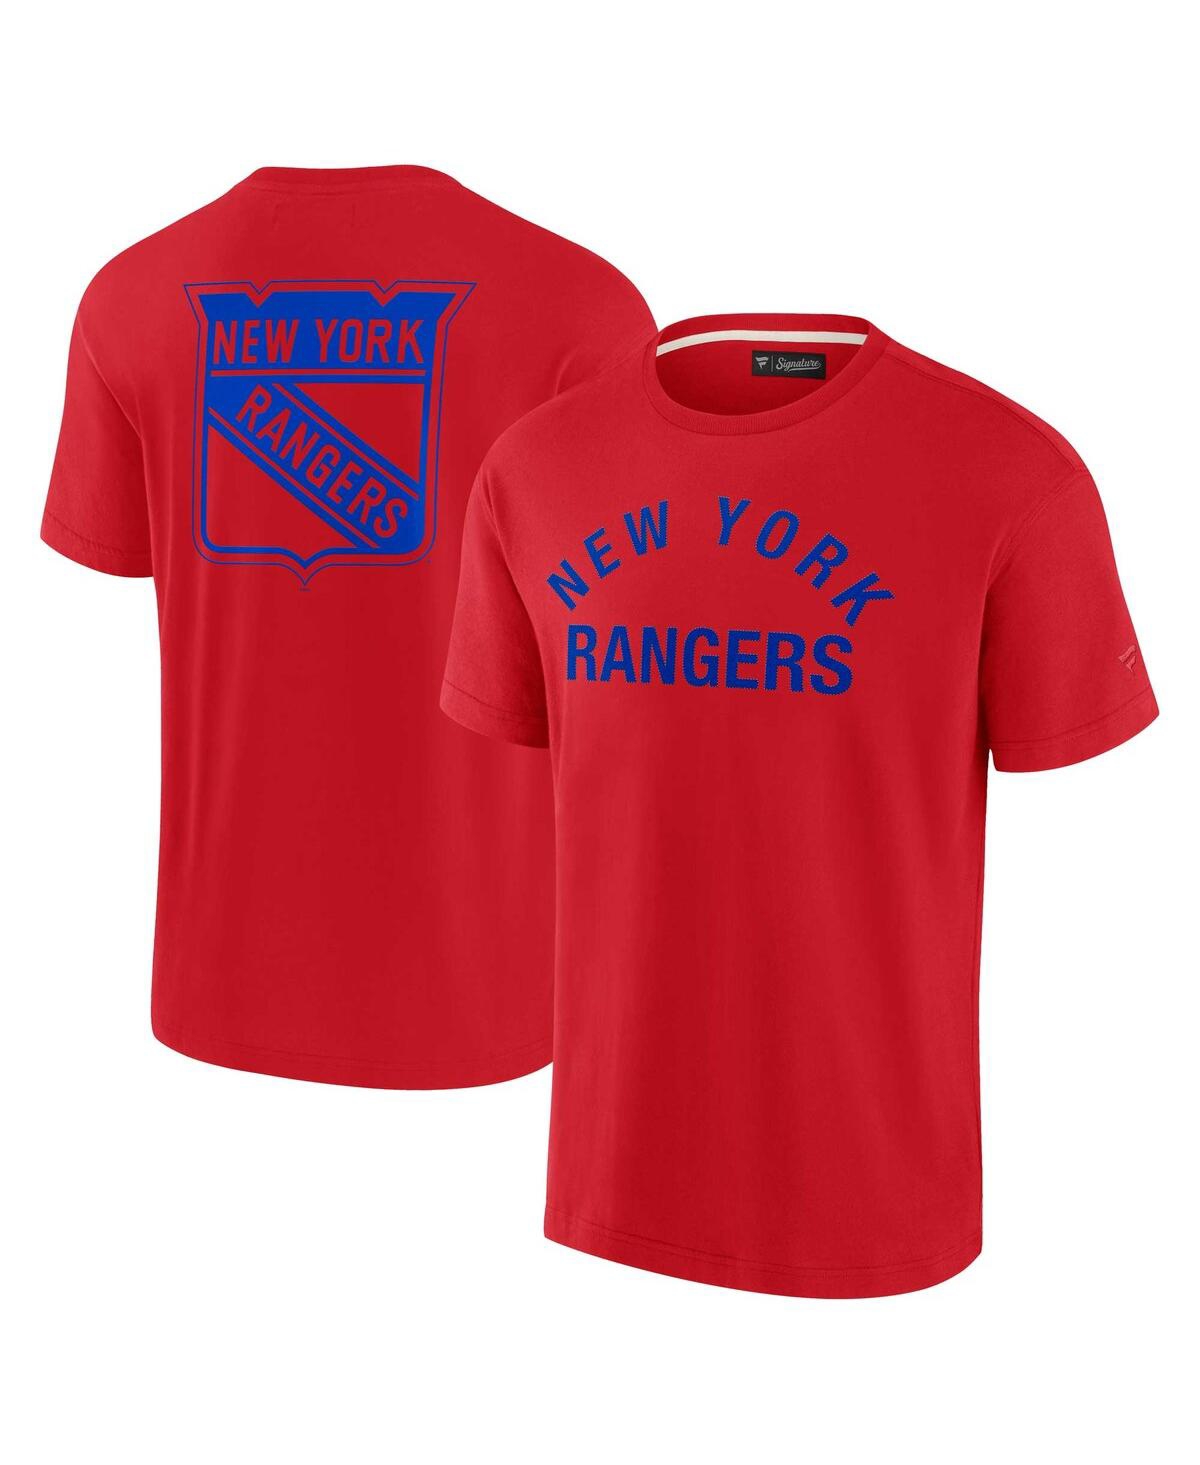 Shop Fanatics Signature Men's And Women's  Red New York Rangers Super Soft Short Sleeve T-shirt